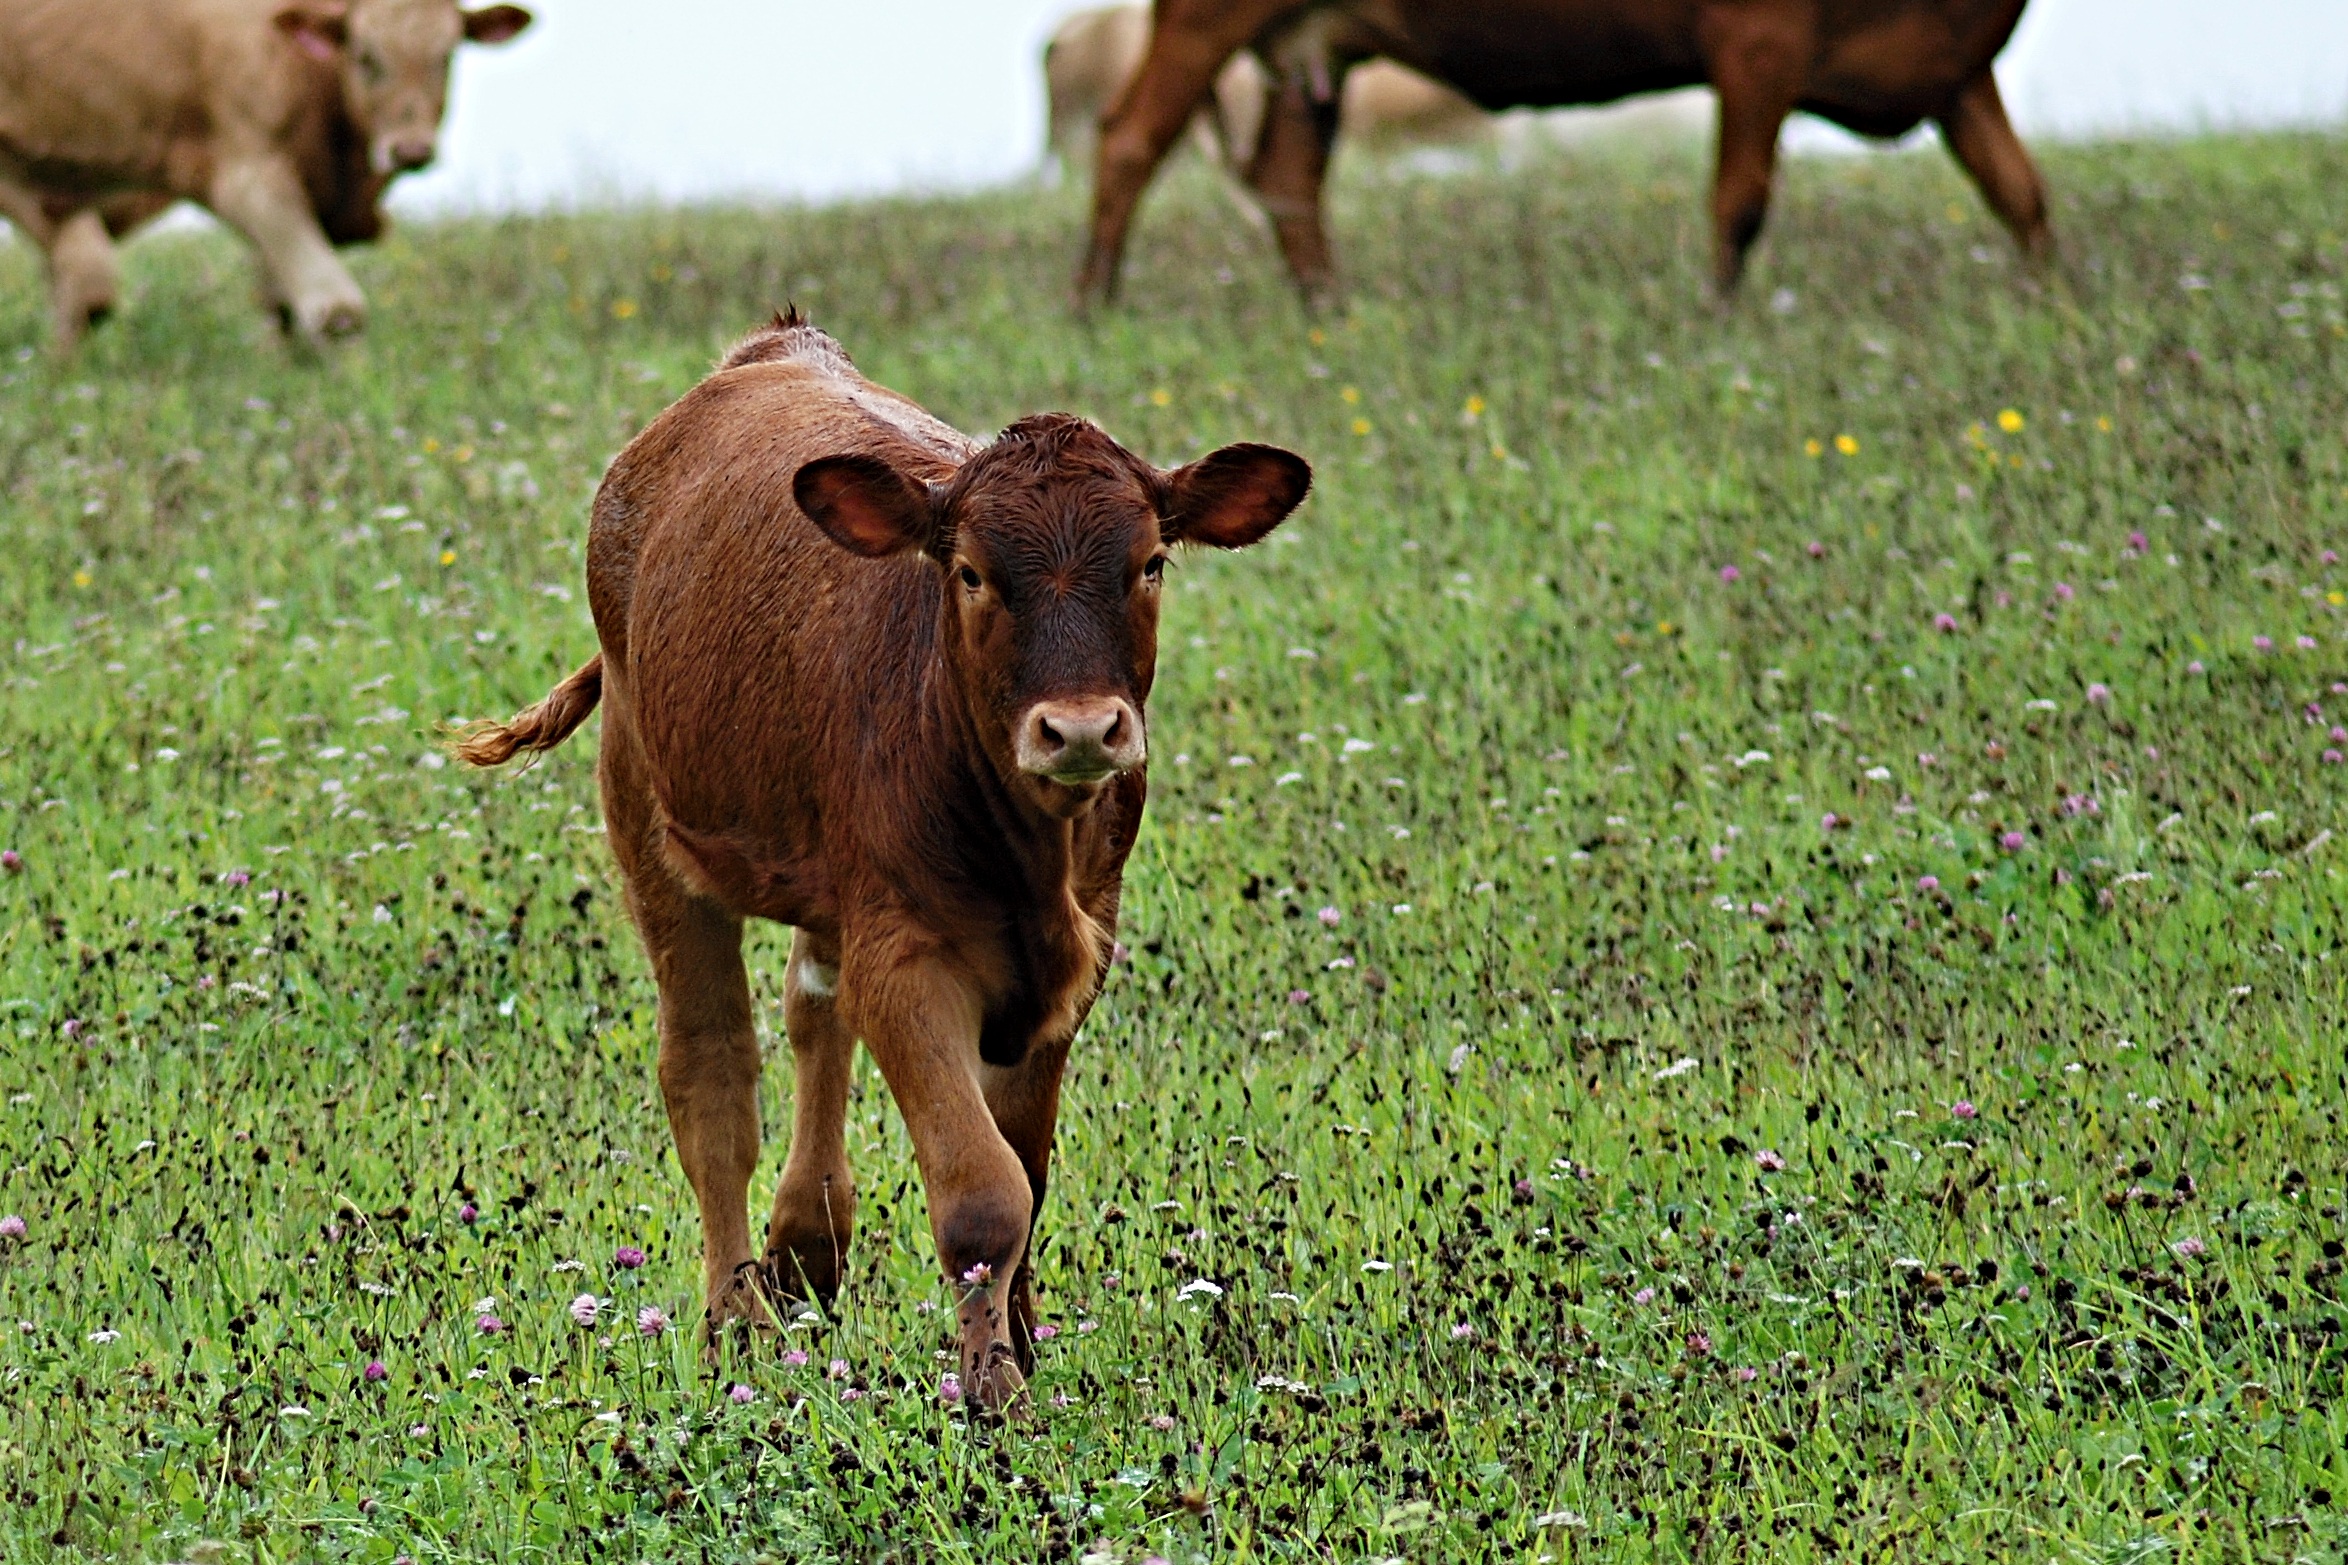 A calf walks in a green field